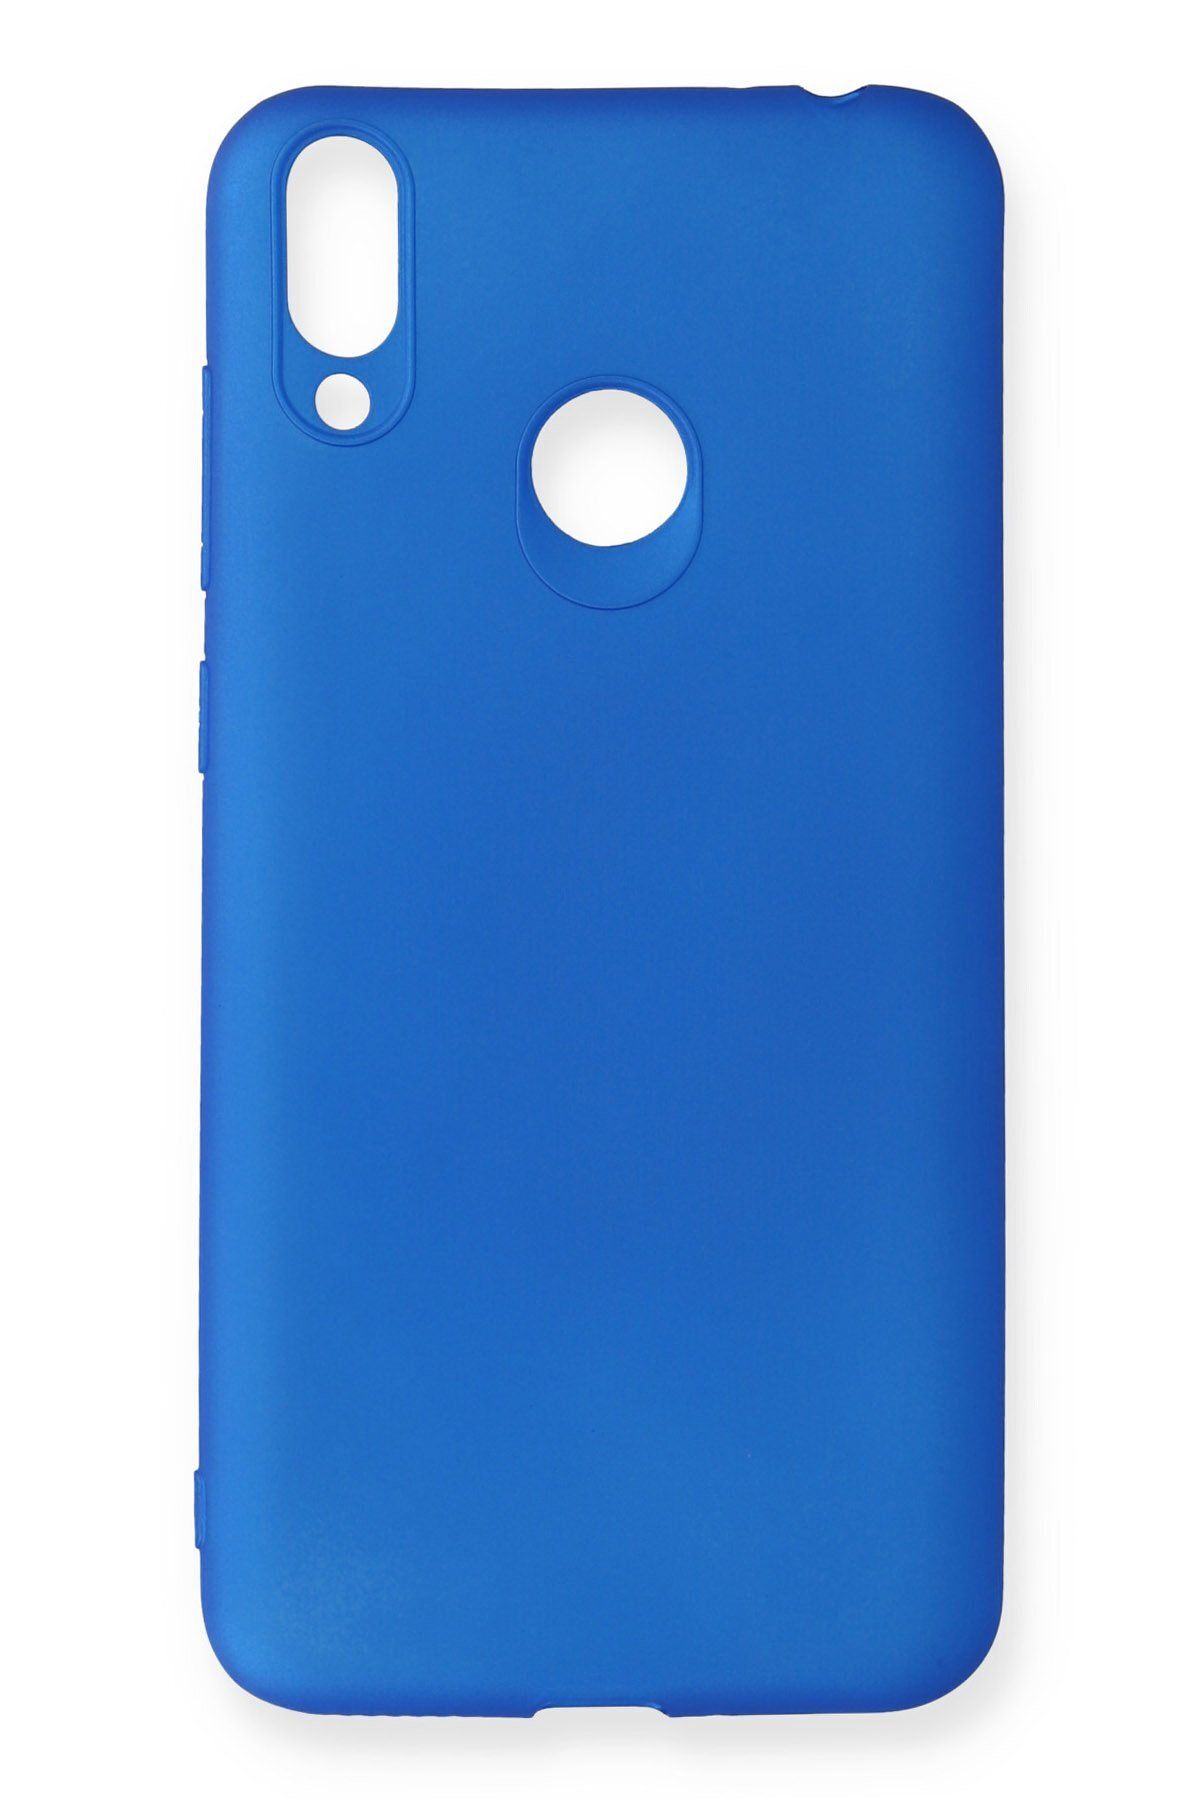 NewFace Huawei Honor 8c Kılıf Premium Rubber Silikon - Mavi 317105